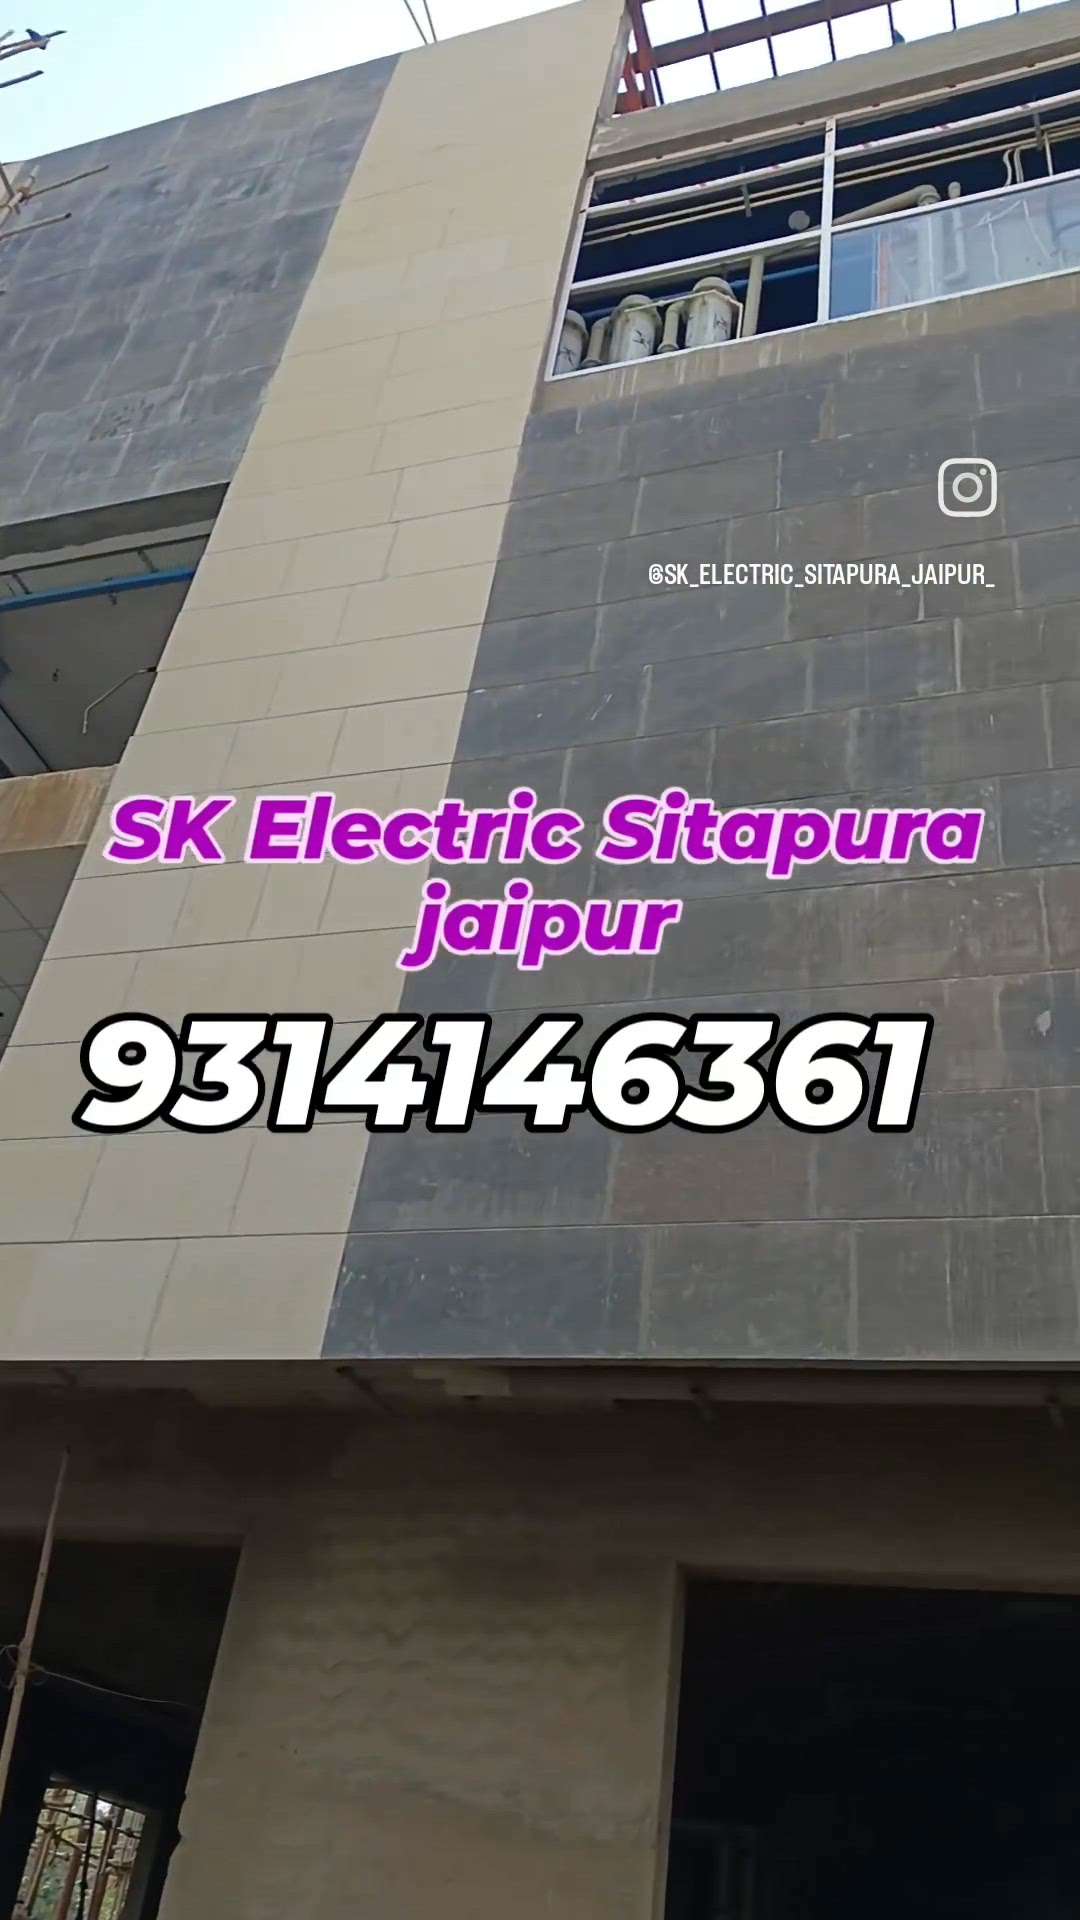 #sk  #electric  #sitapura  #jaipur